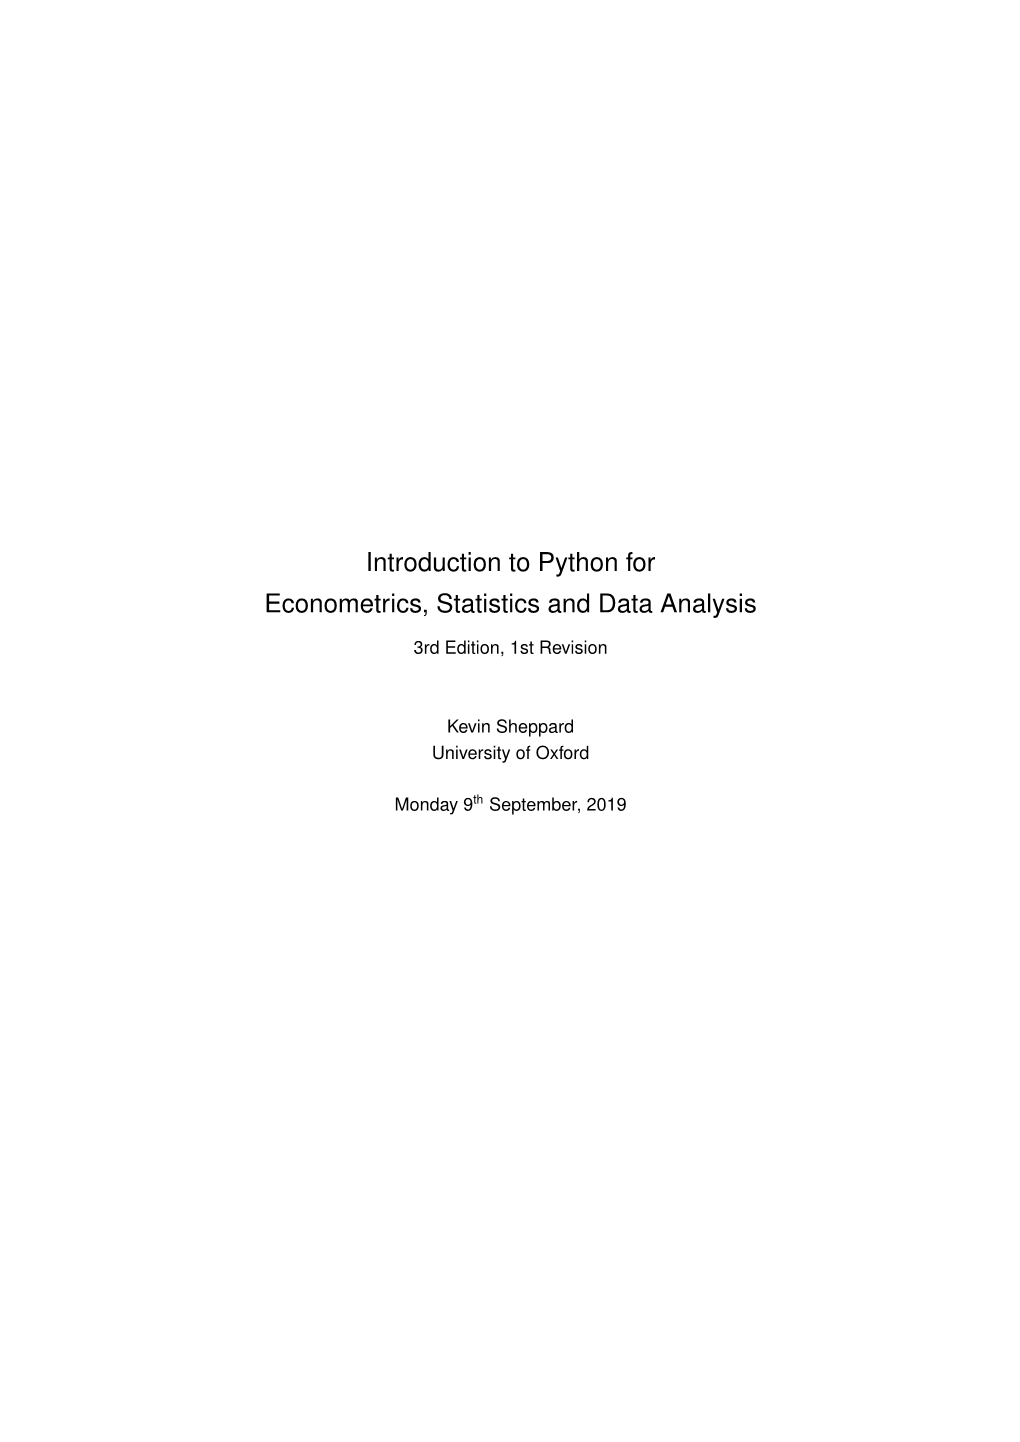 Introduction to Python for Econometrics, Statistics and Data Analysis